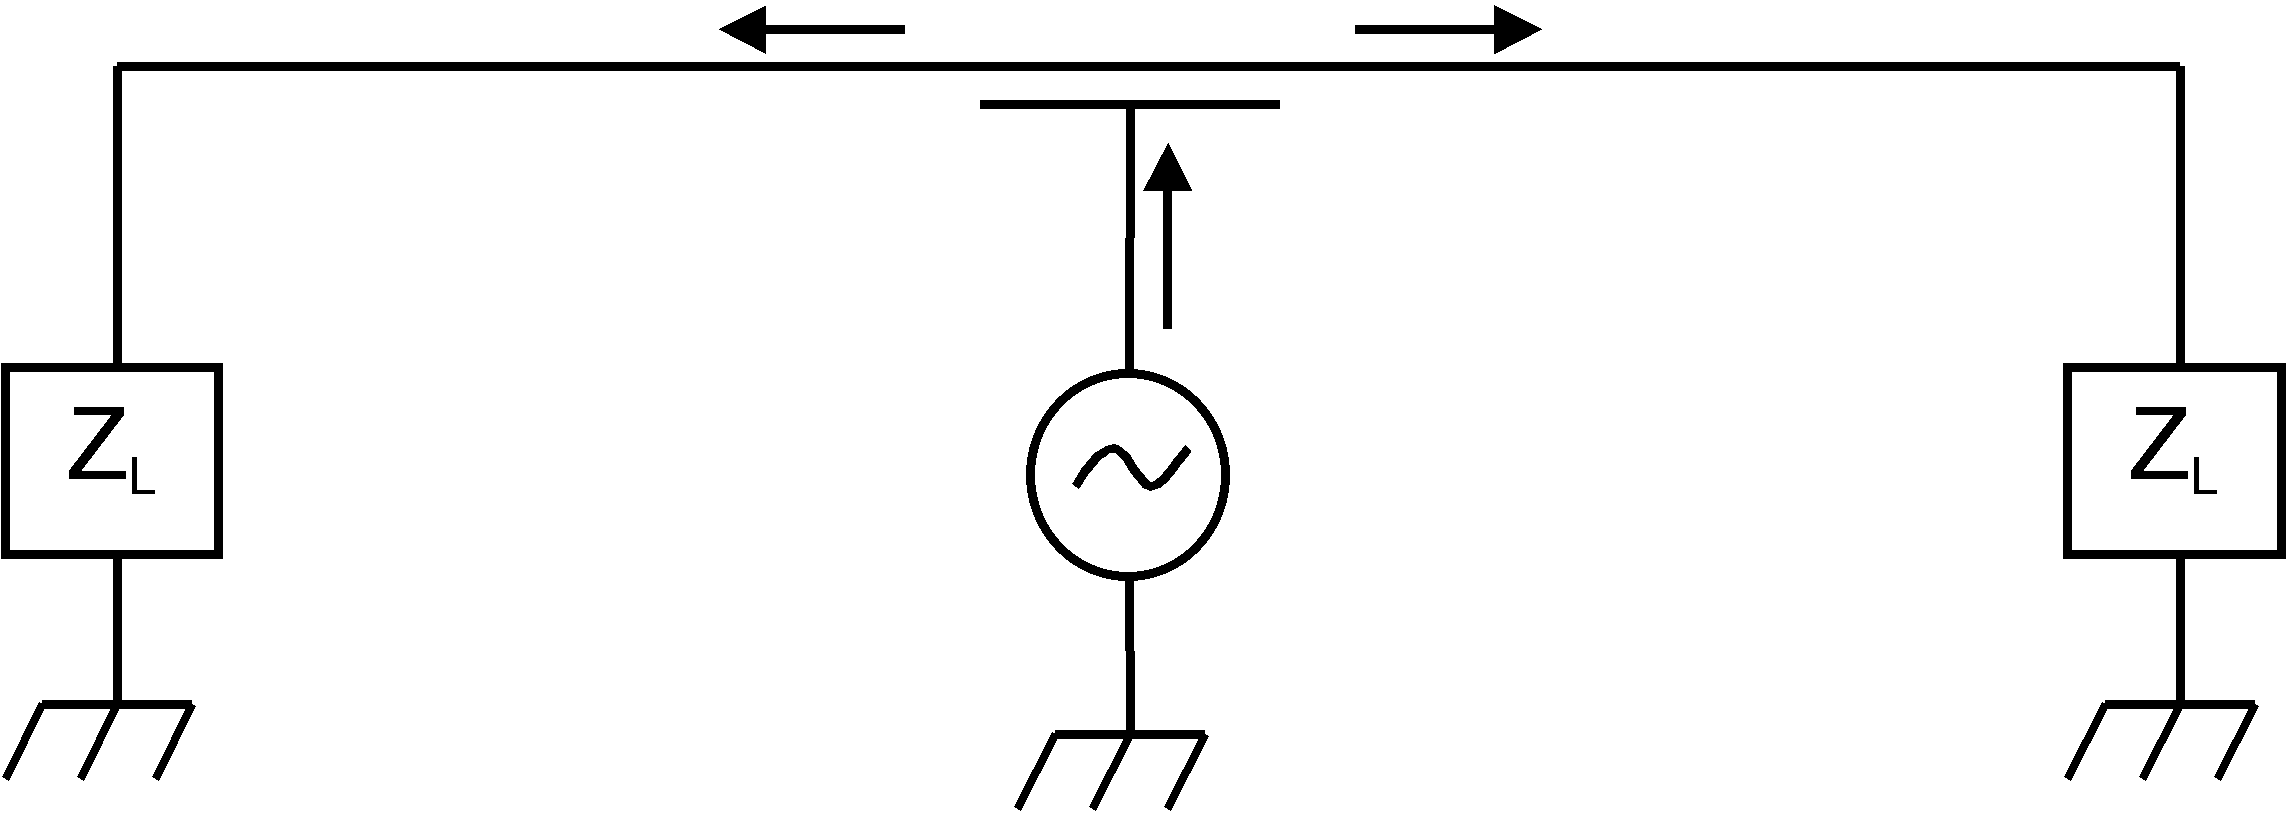 capacitive coupling circuit